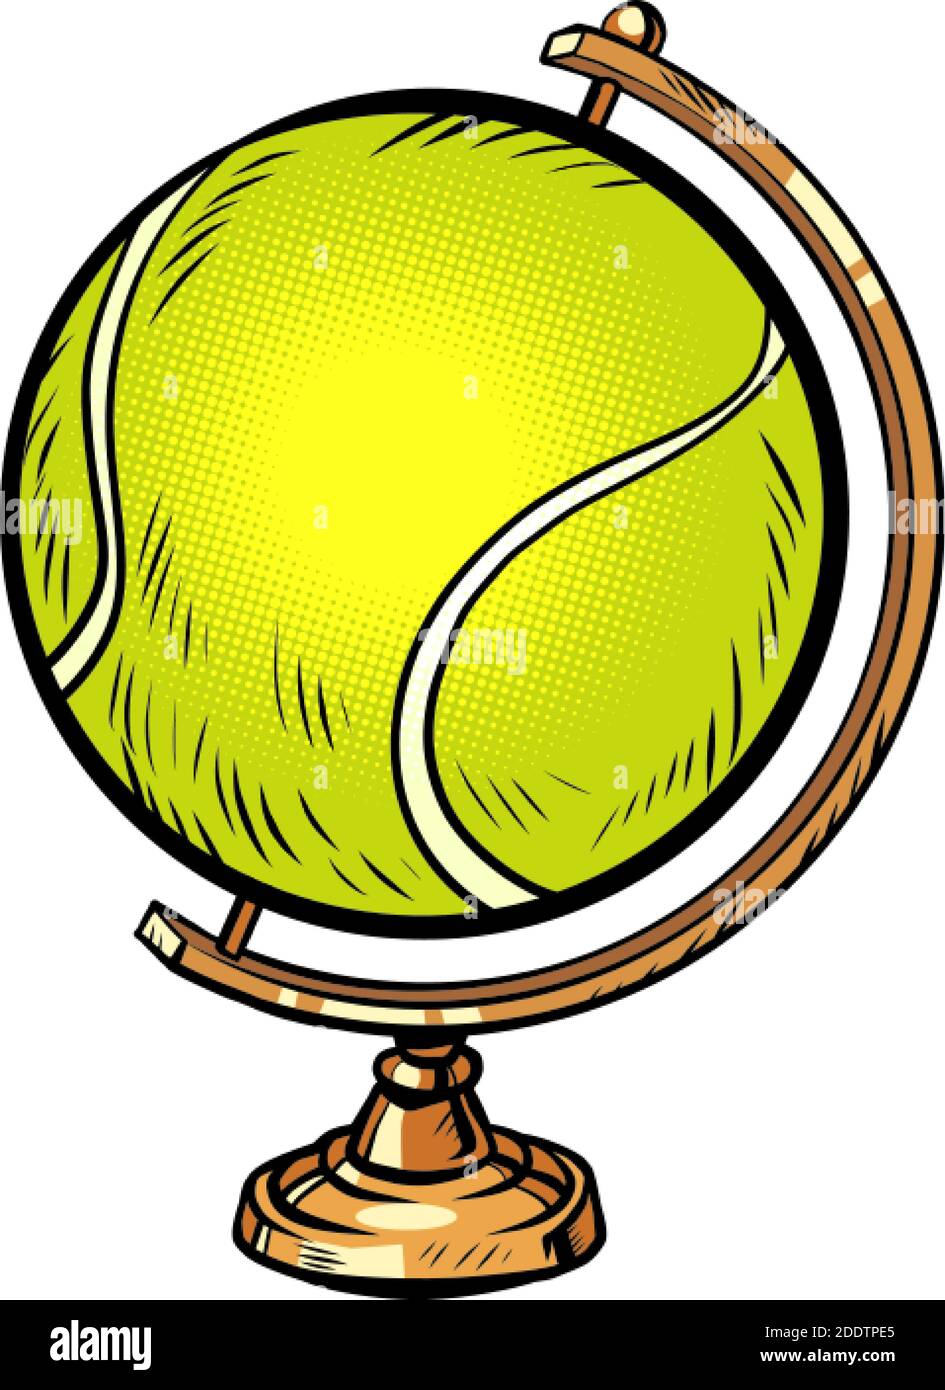 globe international tennis ball sports equipment Stock Vector